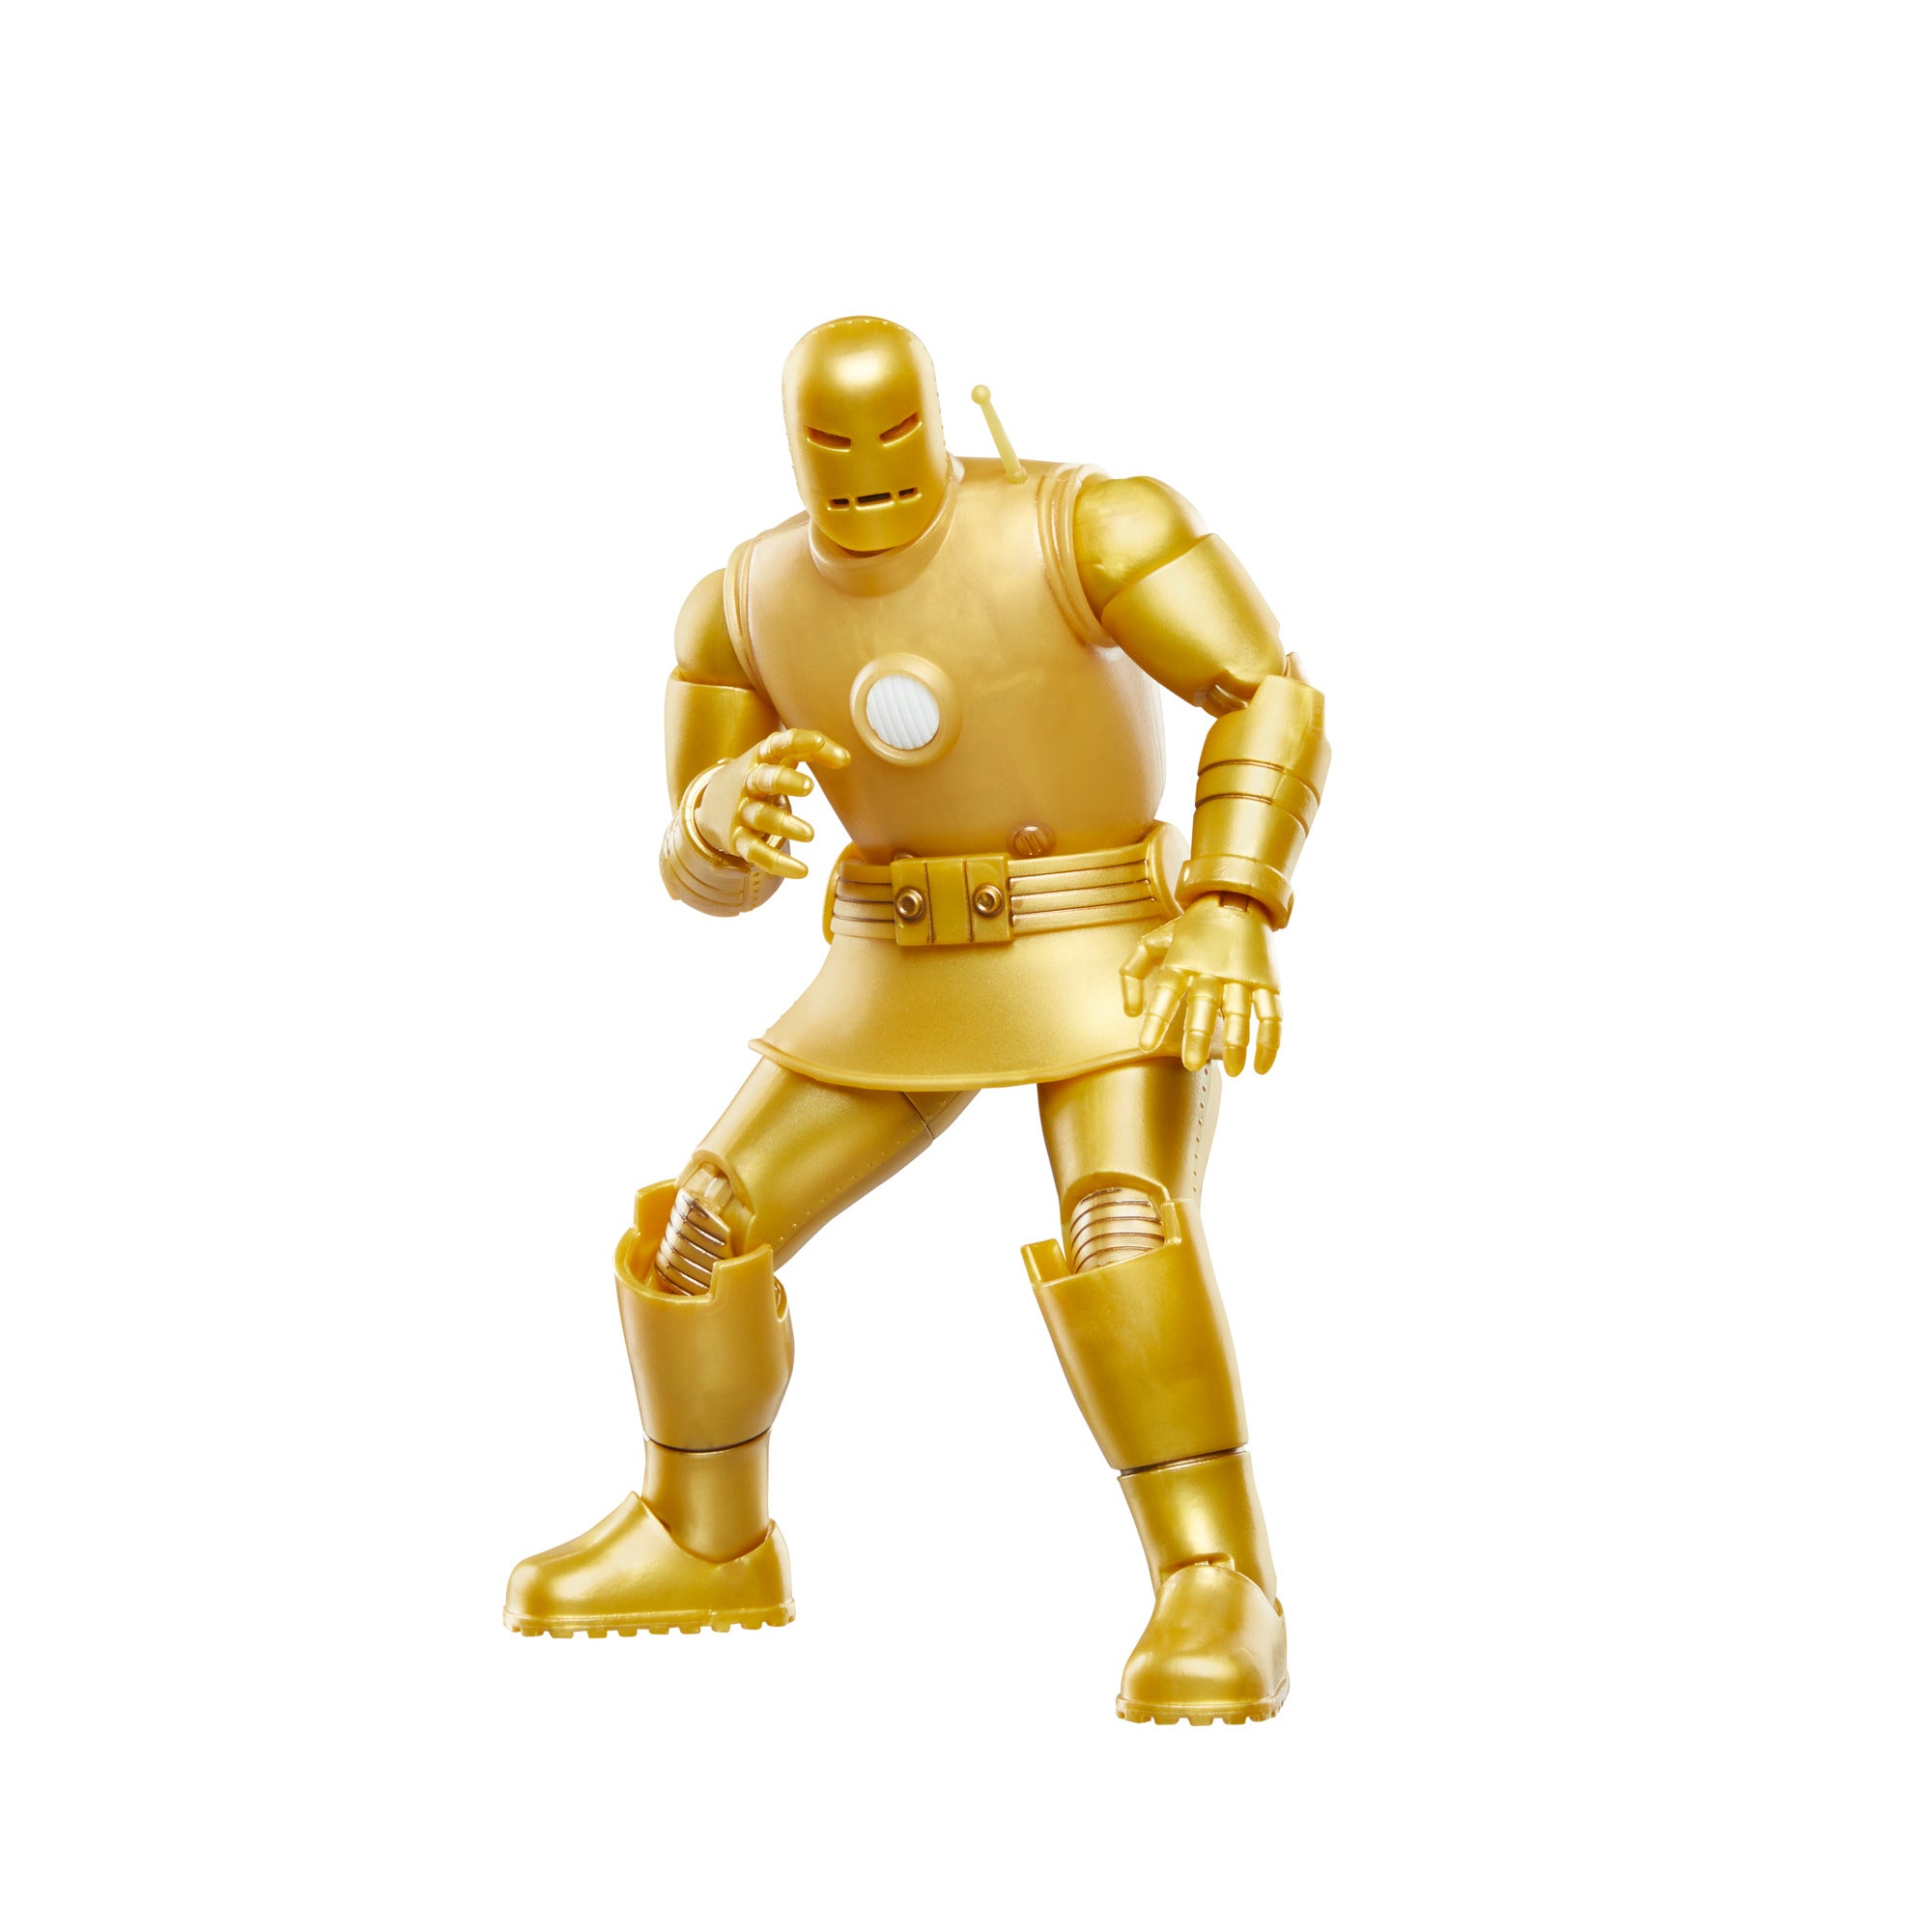 Marvel Legends Classic: Iron Man - Iron Man Modelo 01 Gold